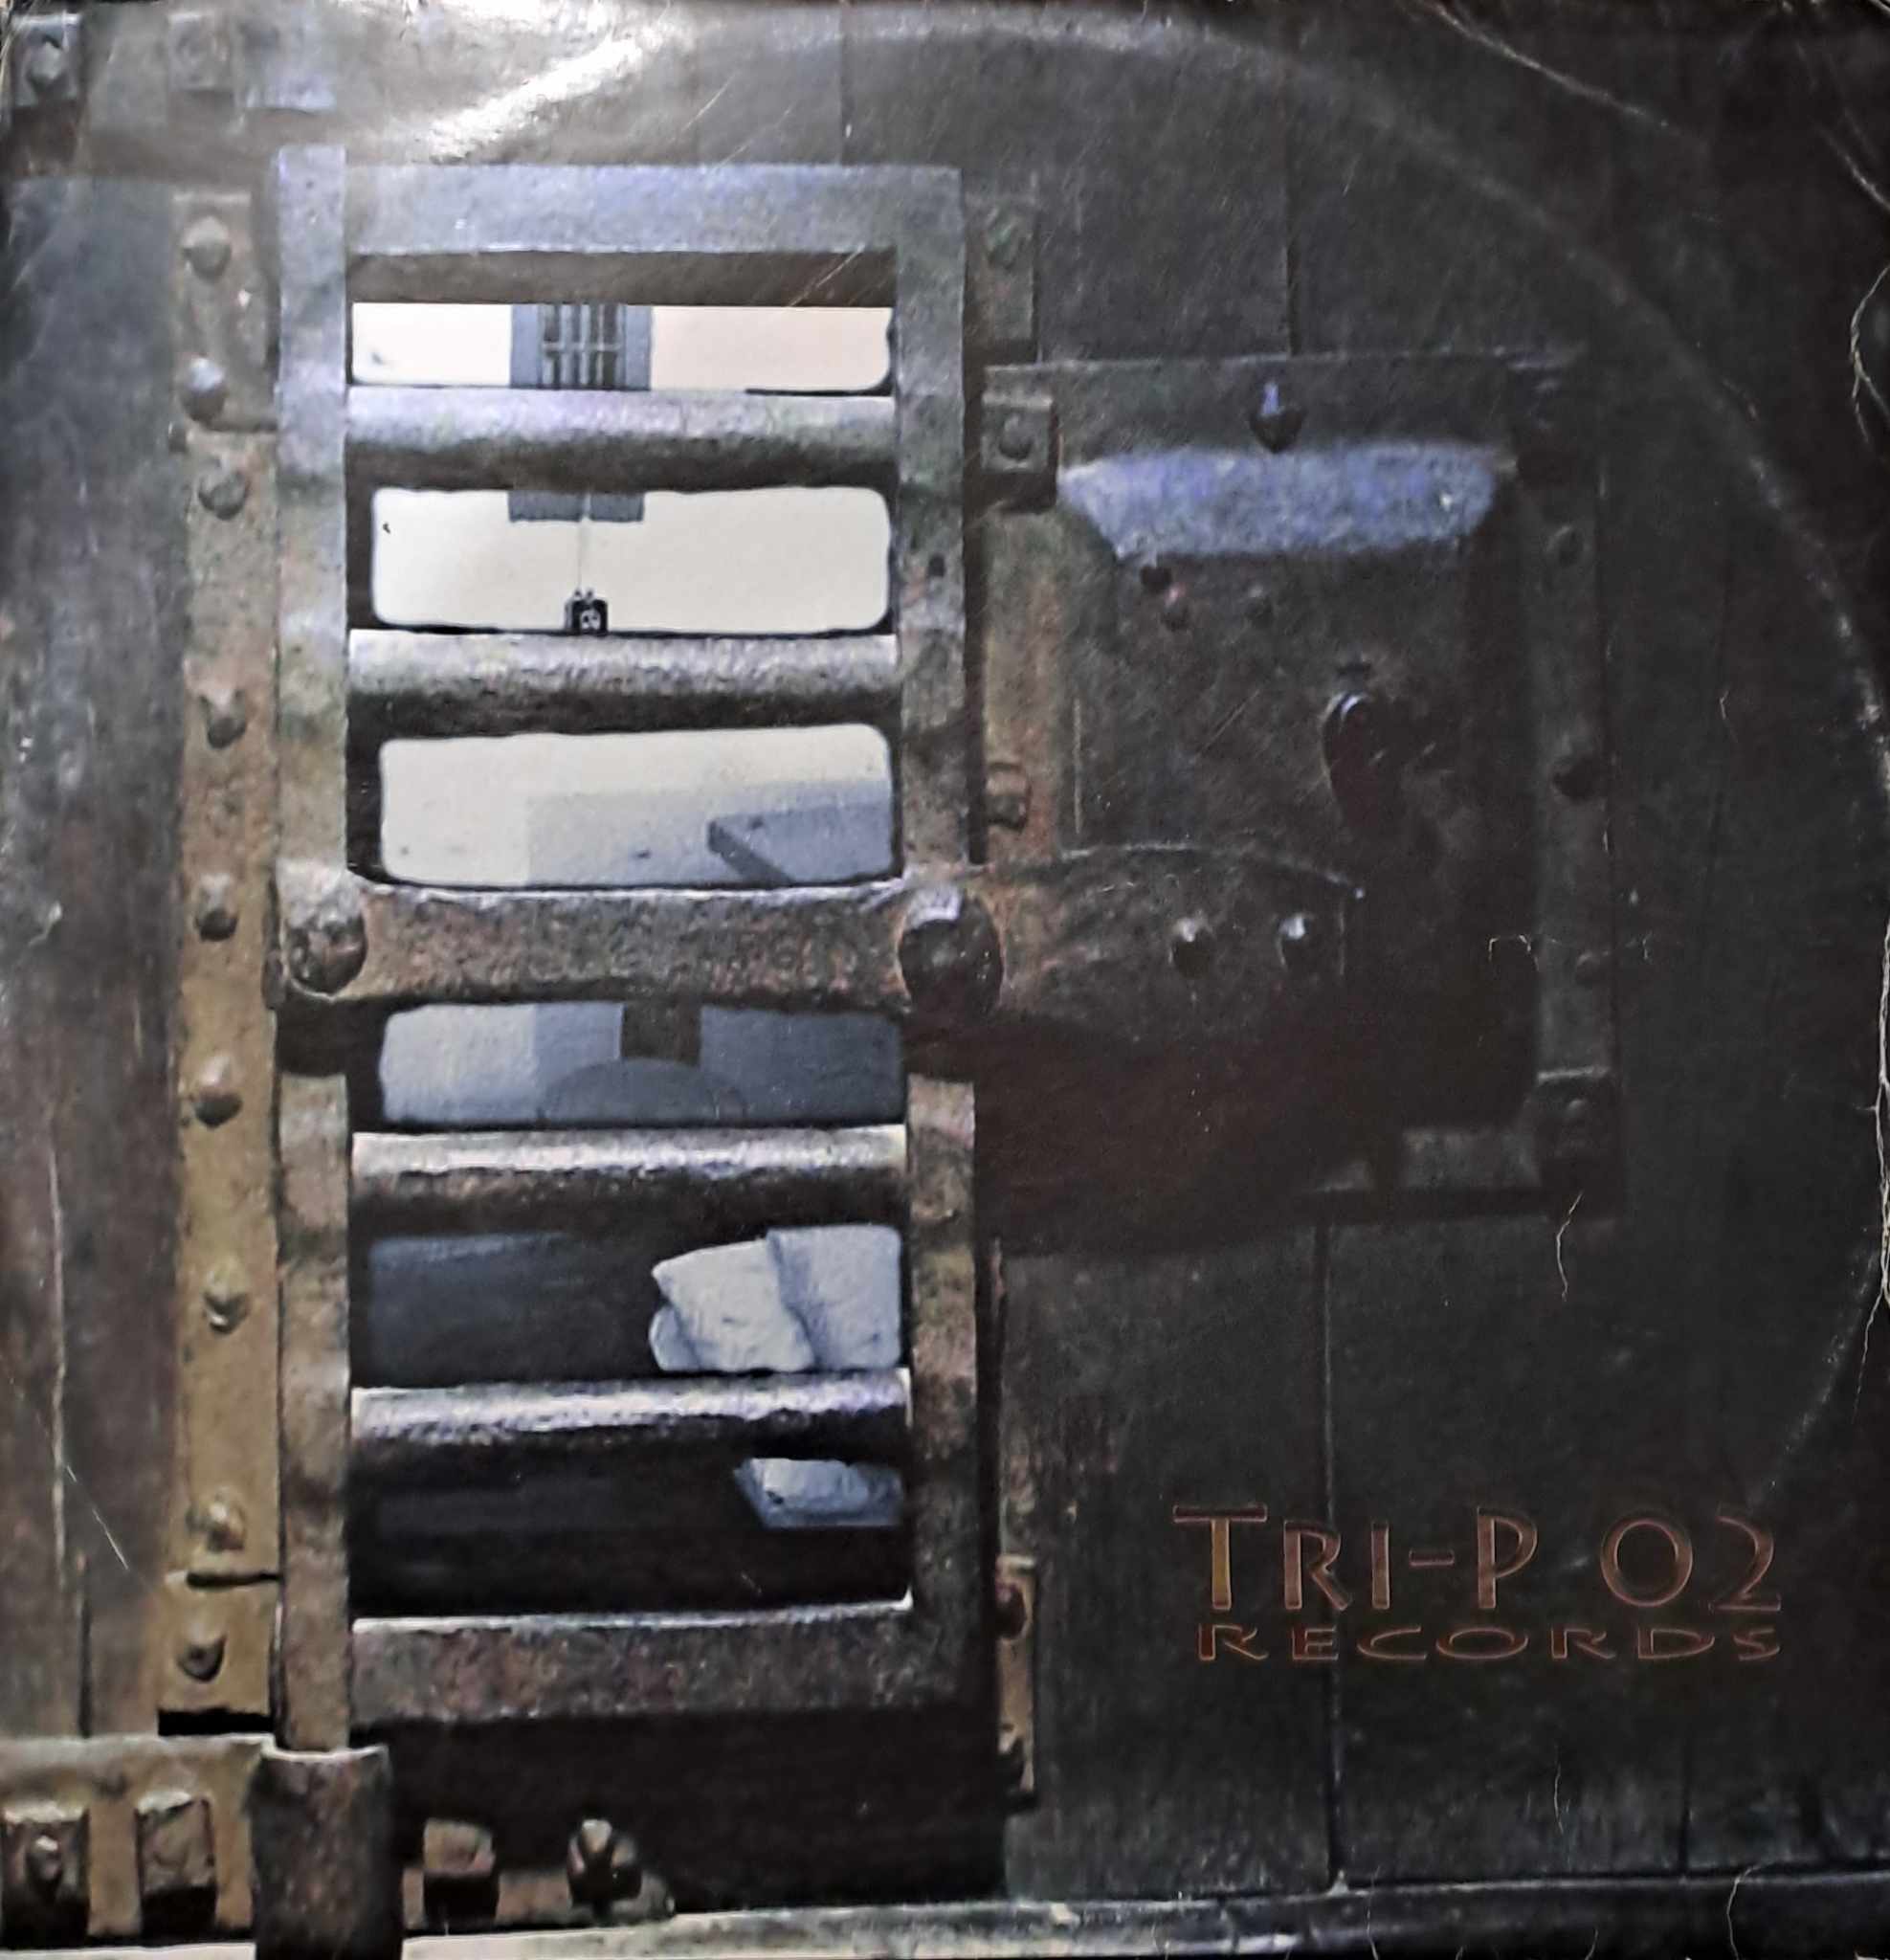 Tri-P Records 02 - vinyle hardcore